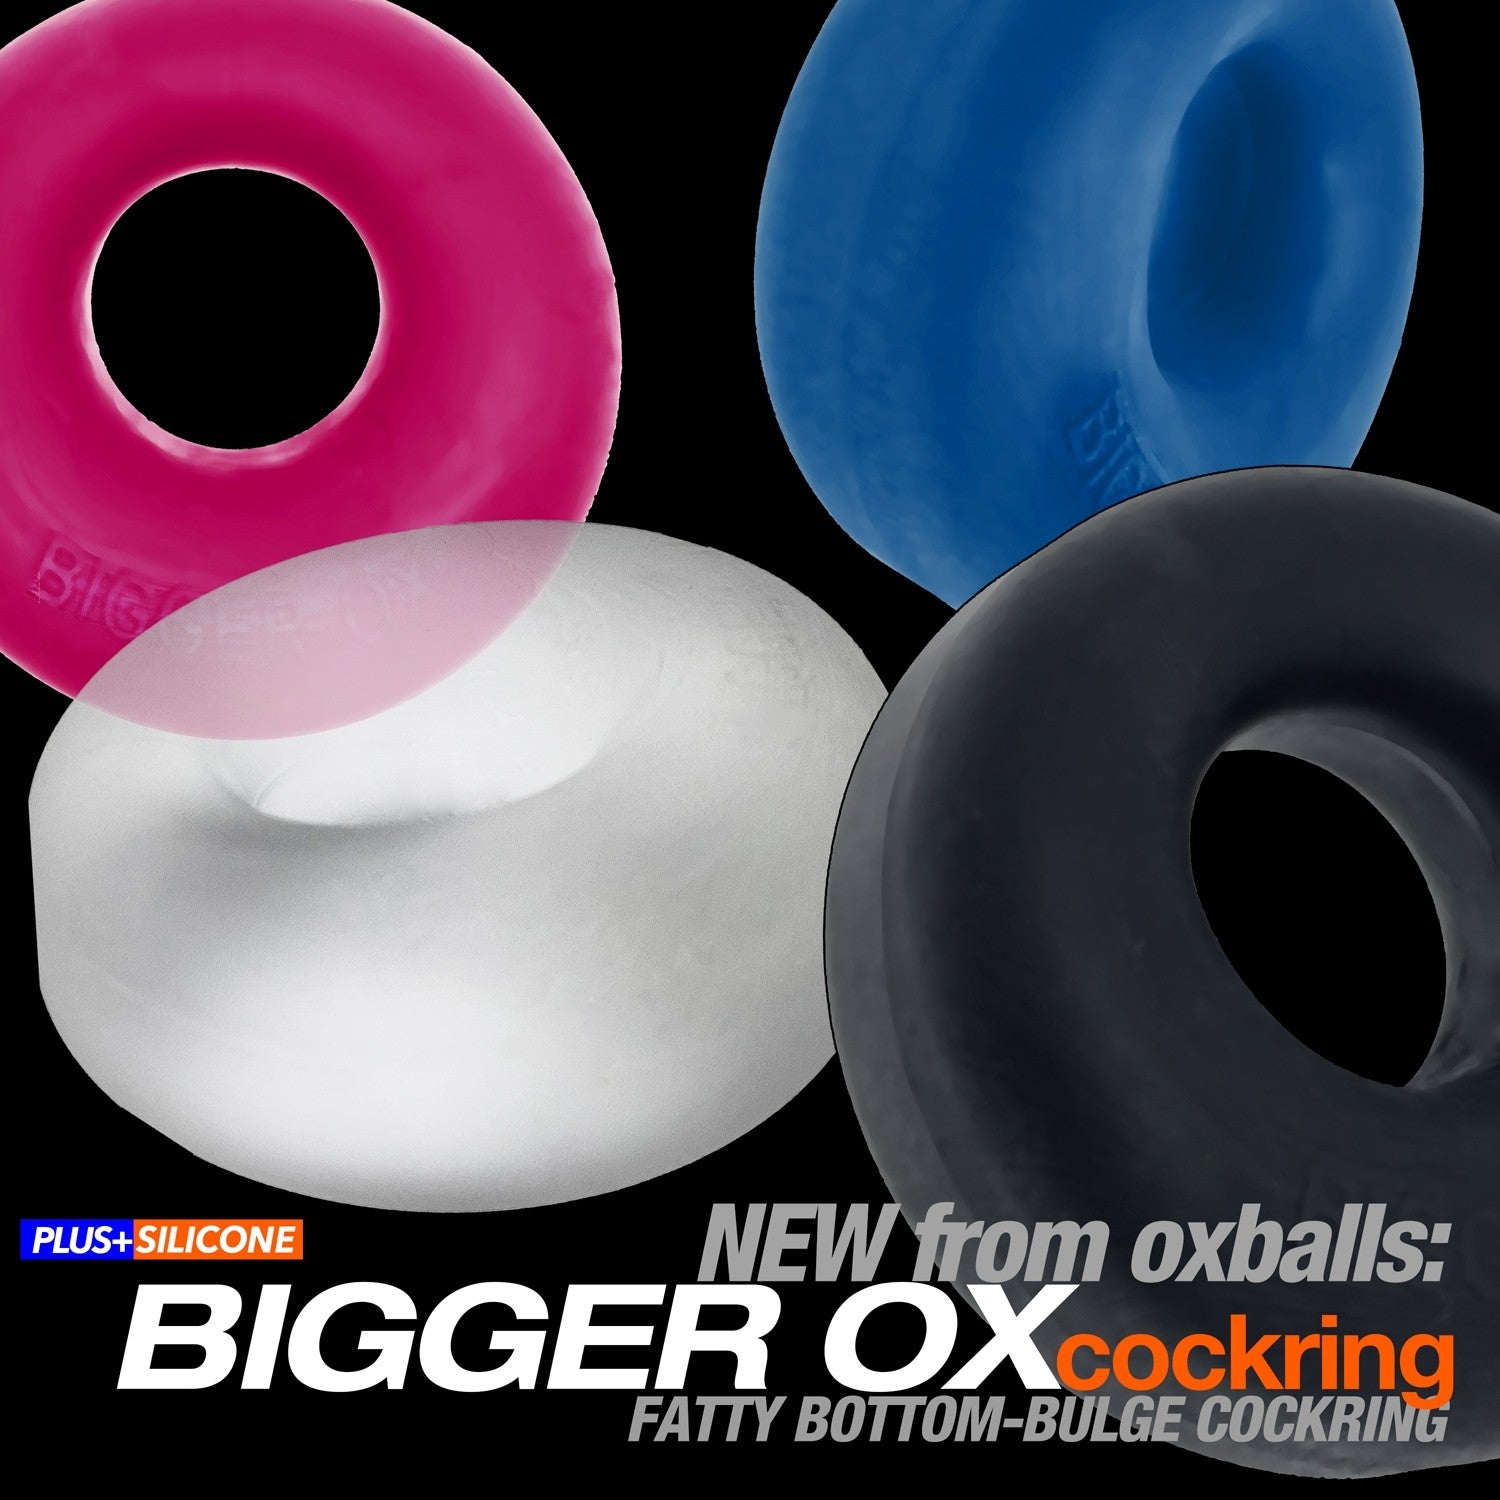 OXBALLS Bigger OX Cockring